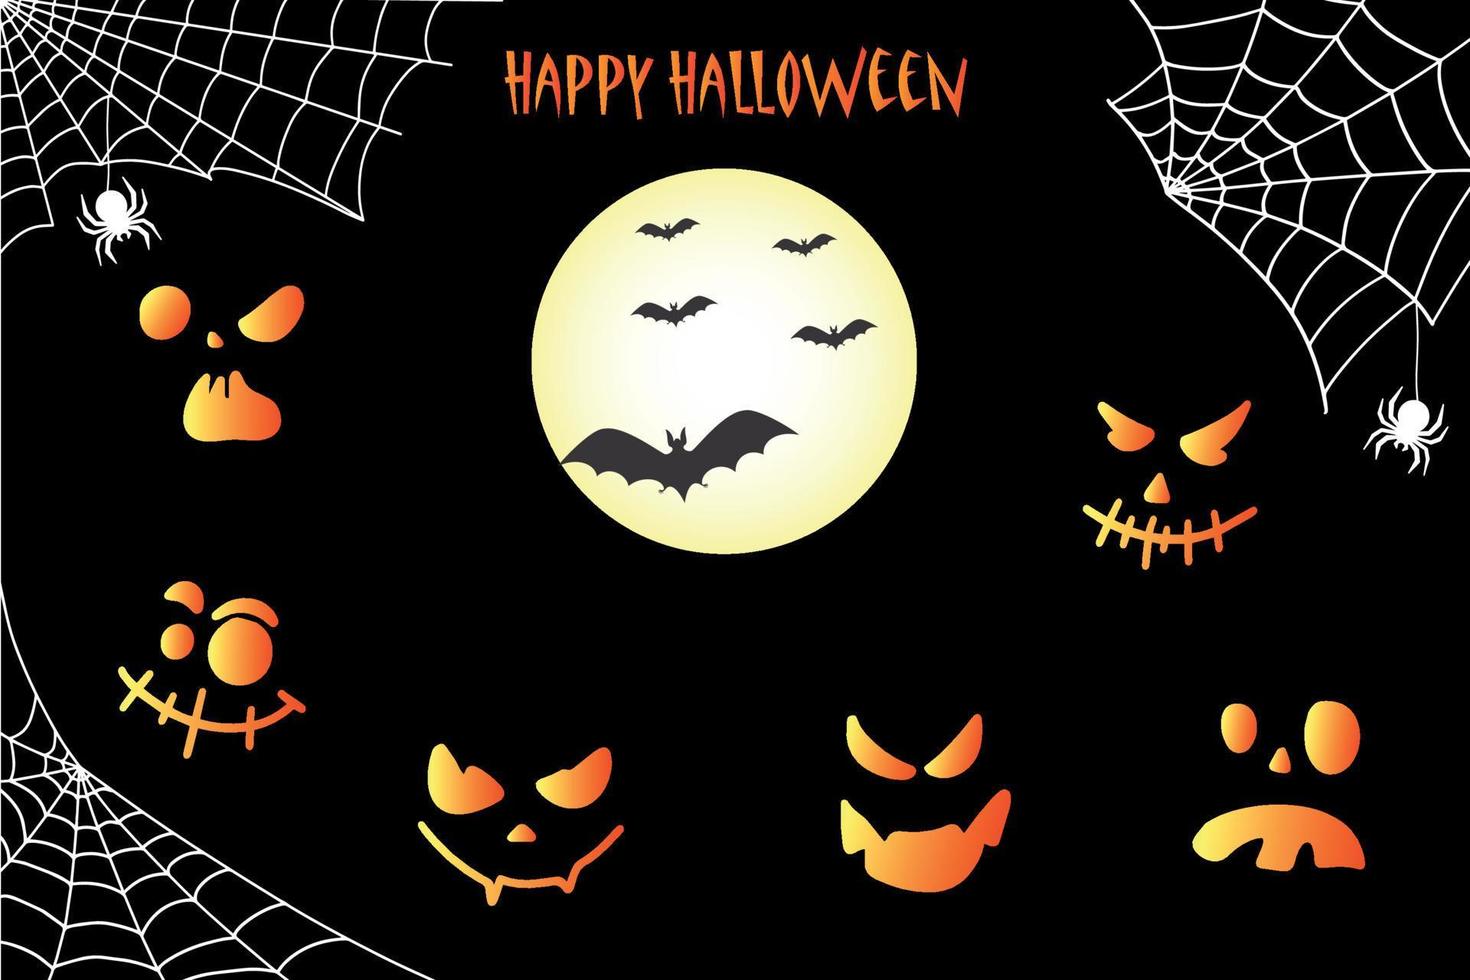 Bat, net and pumpkins. Halloween background with bat and hand drawn pumpkins. vector